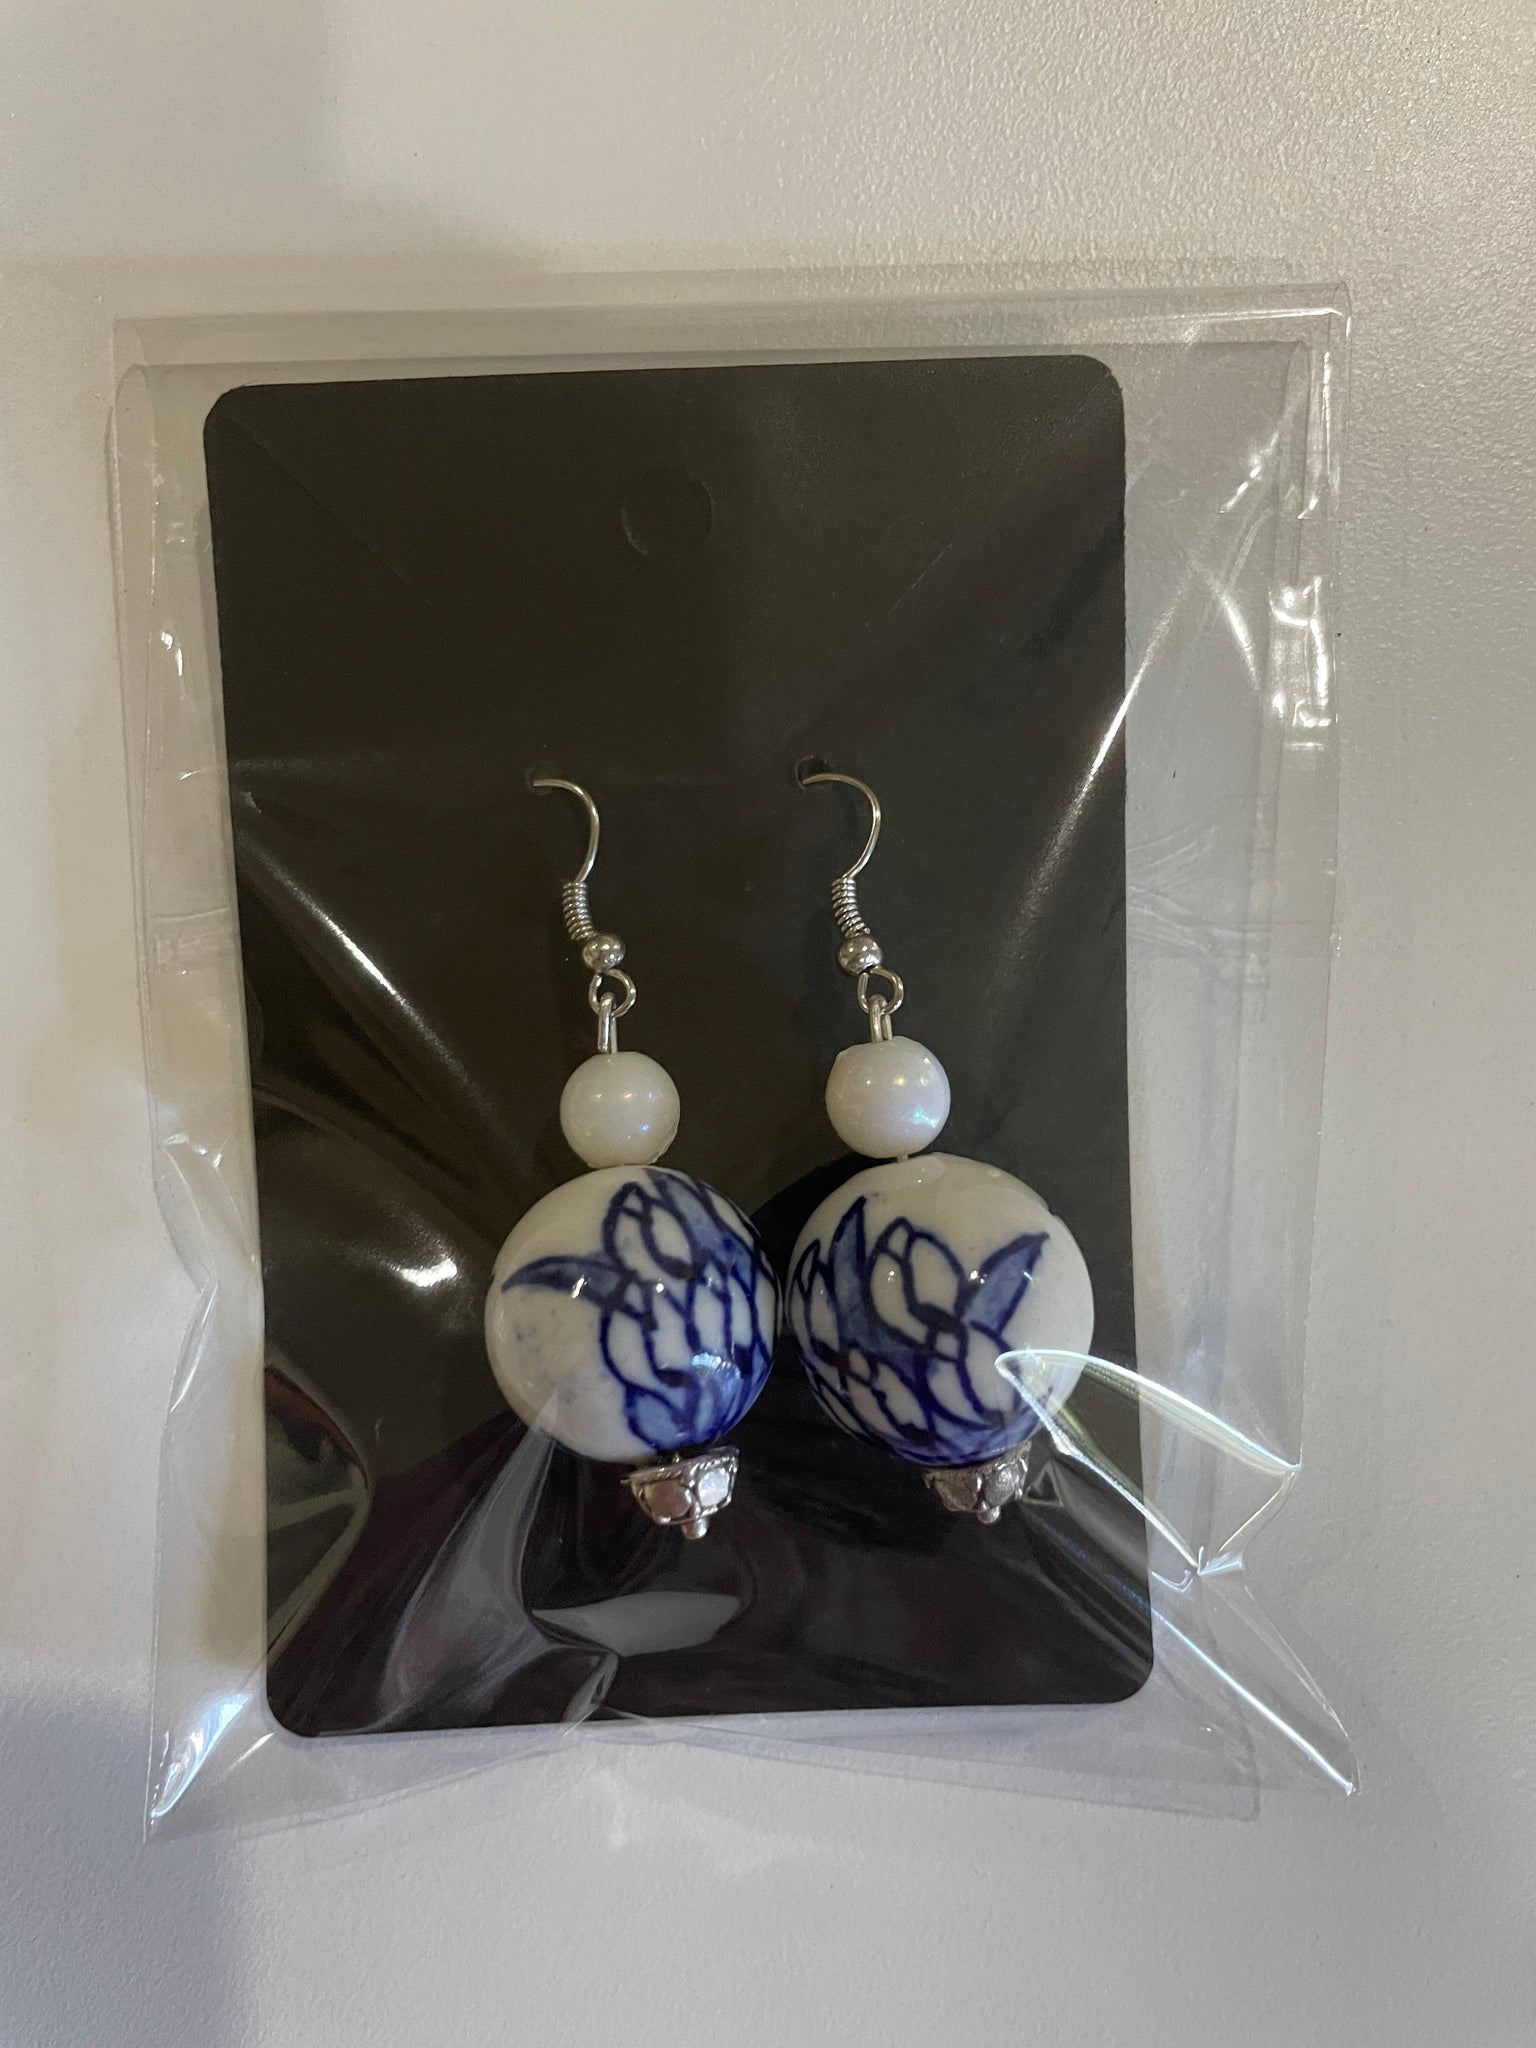 Delft blue ceramic earrings WINDMILL